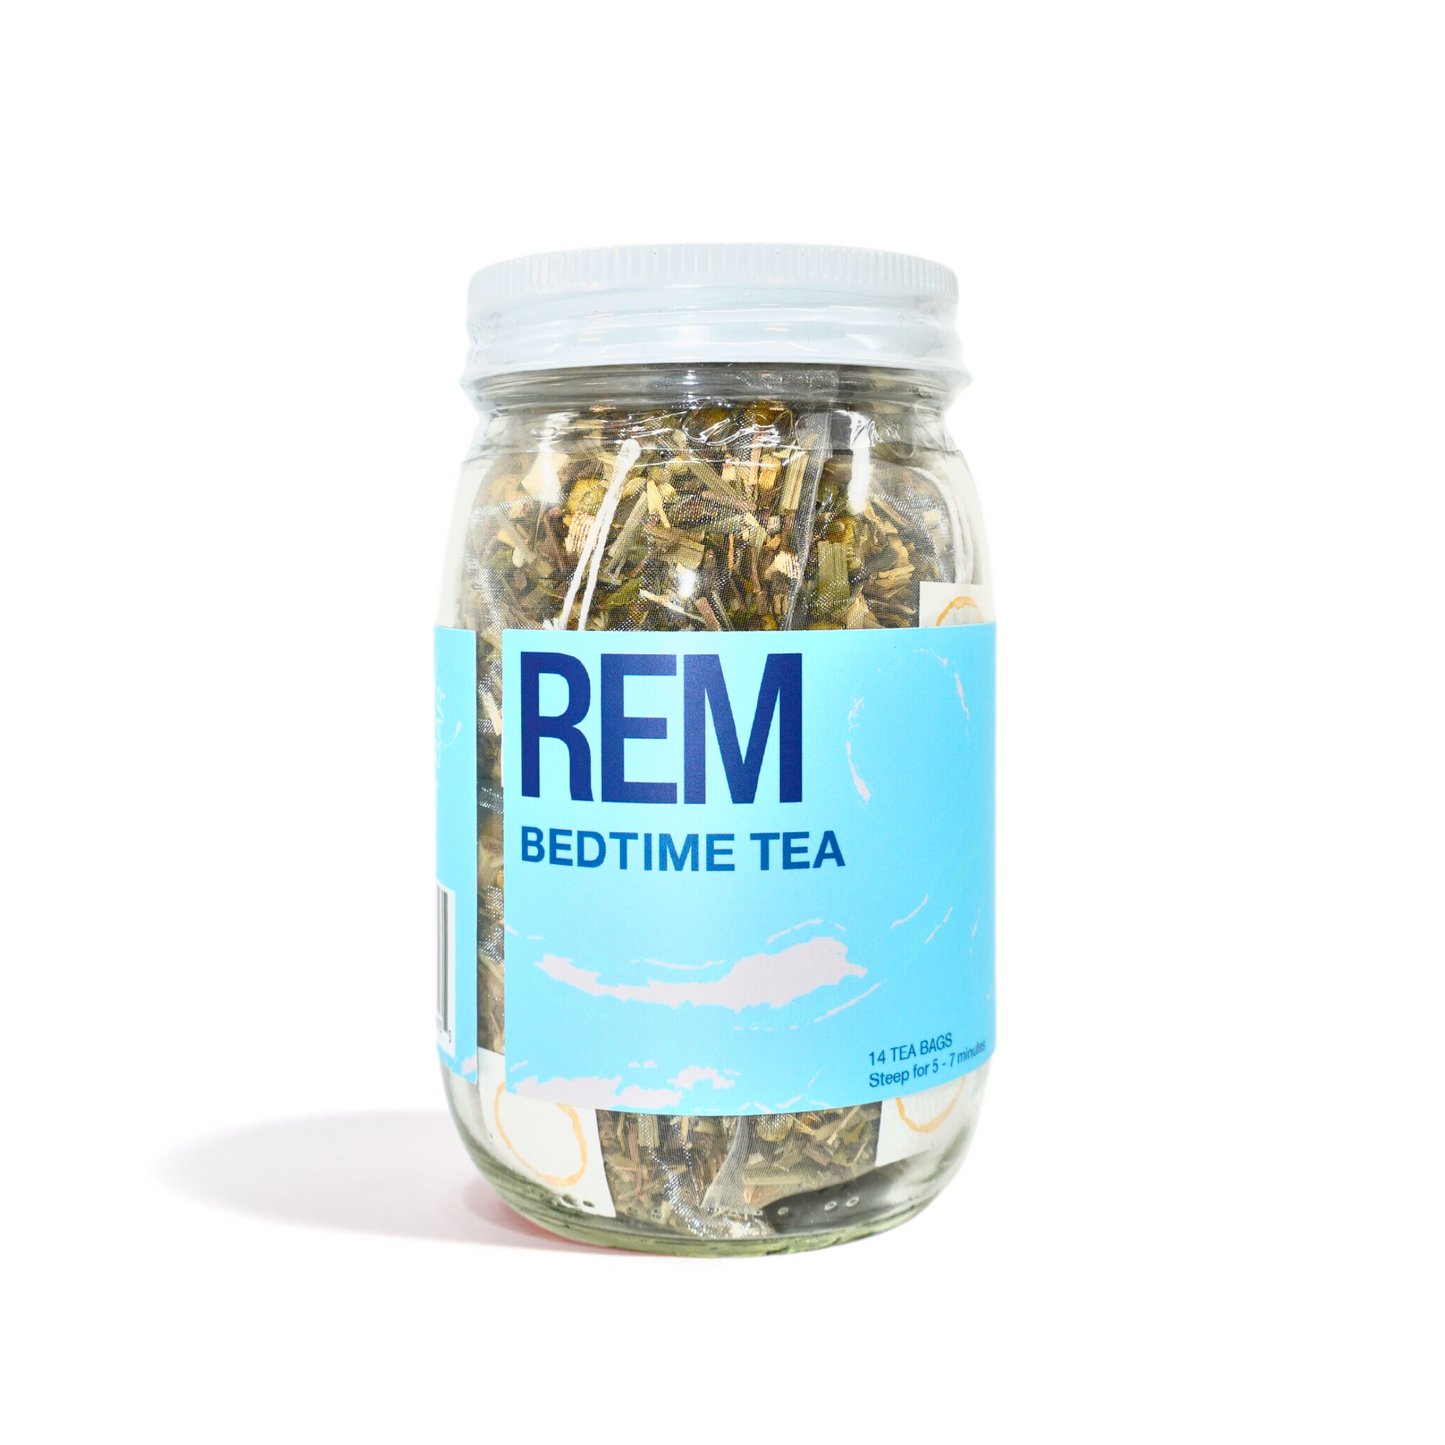 REM – BEDTIME TEA